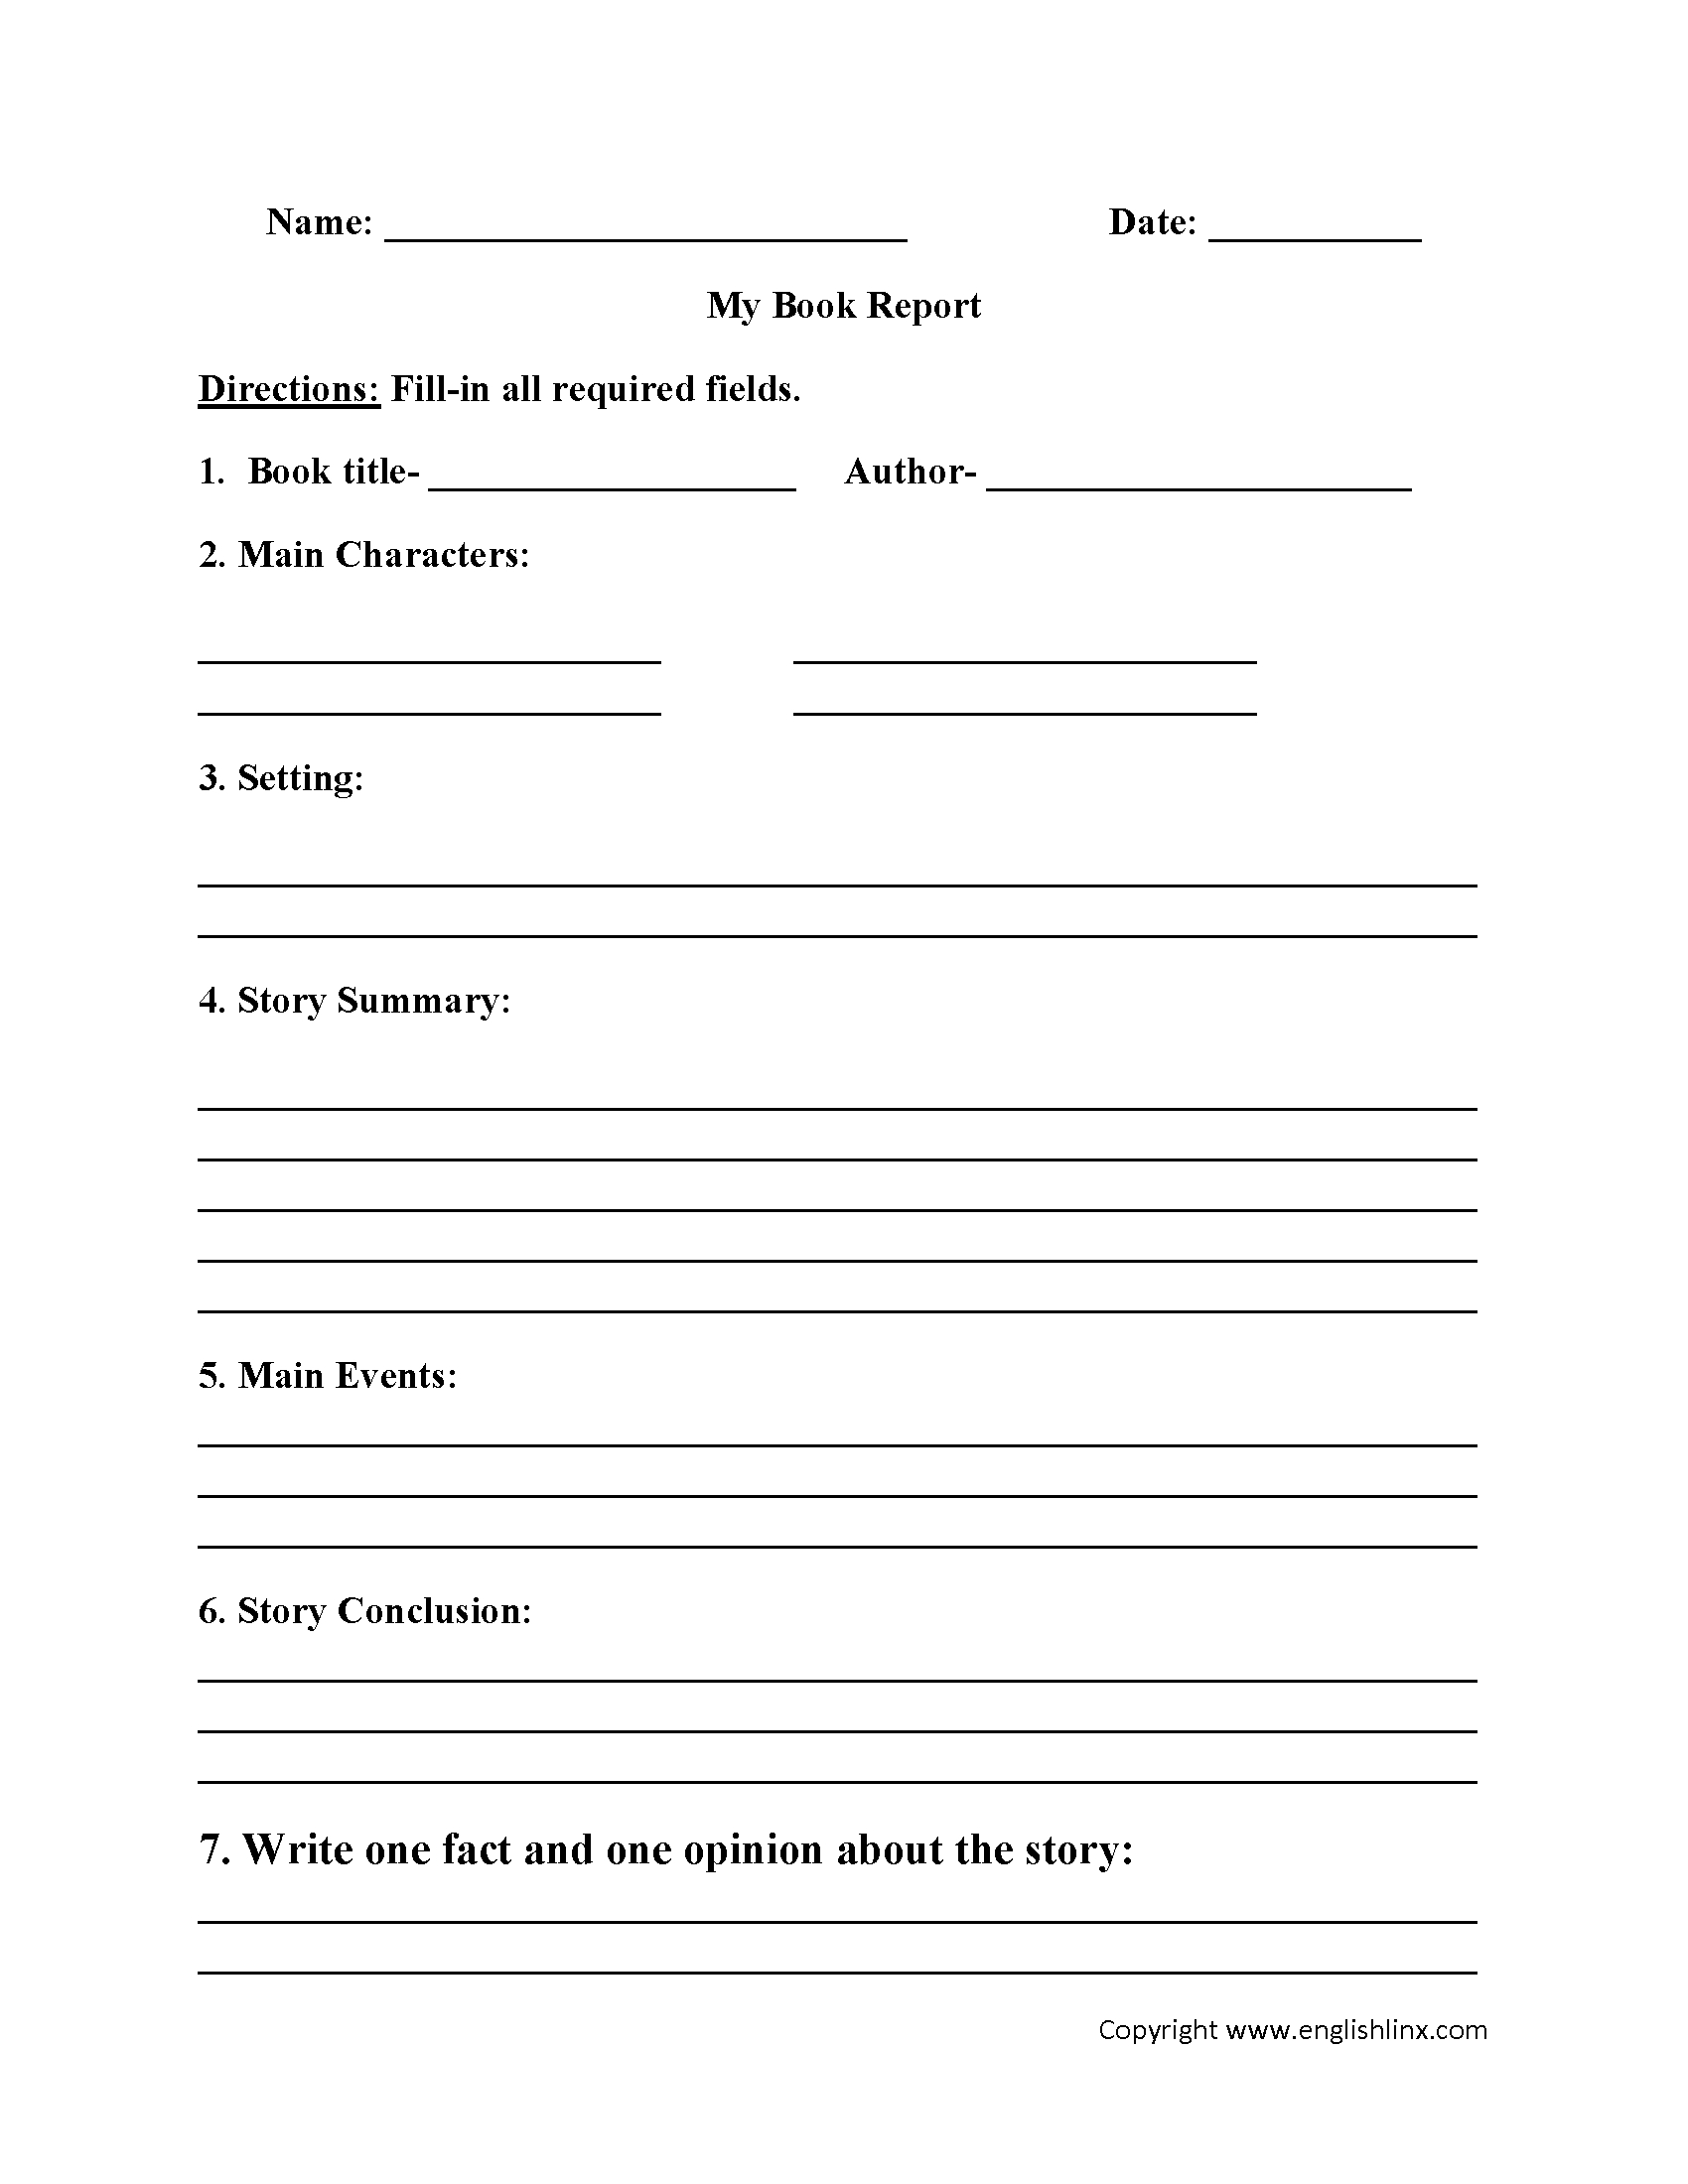 My Book Report Worksheet | Book Report Templates, Book For Book Report Template High School